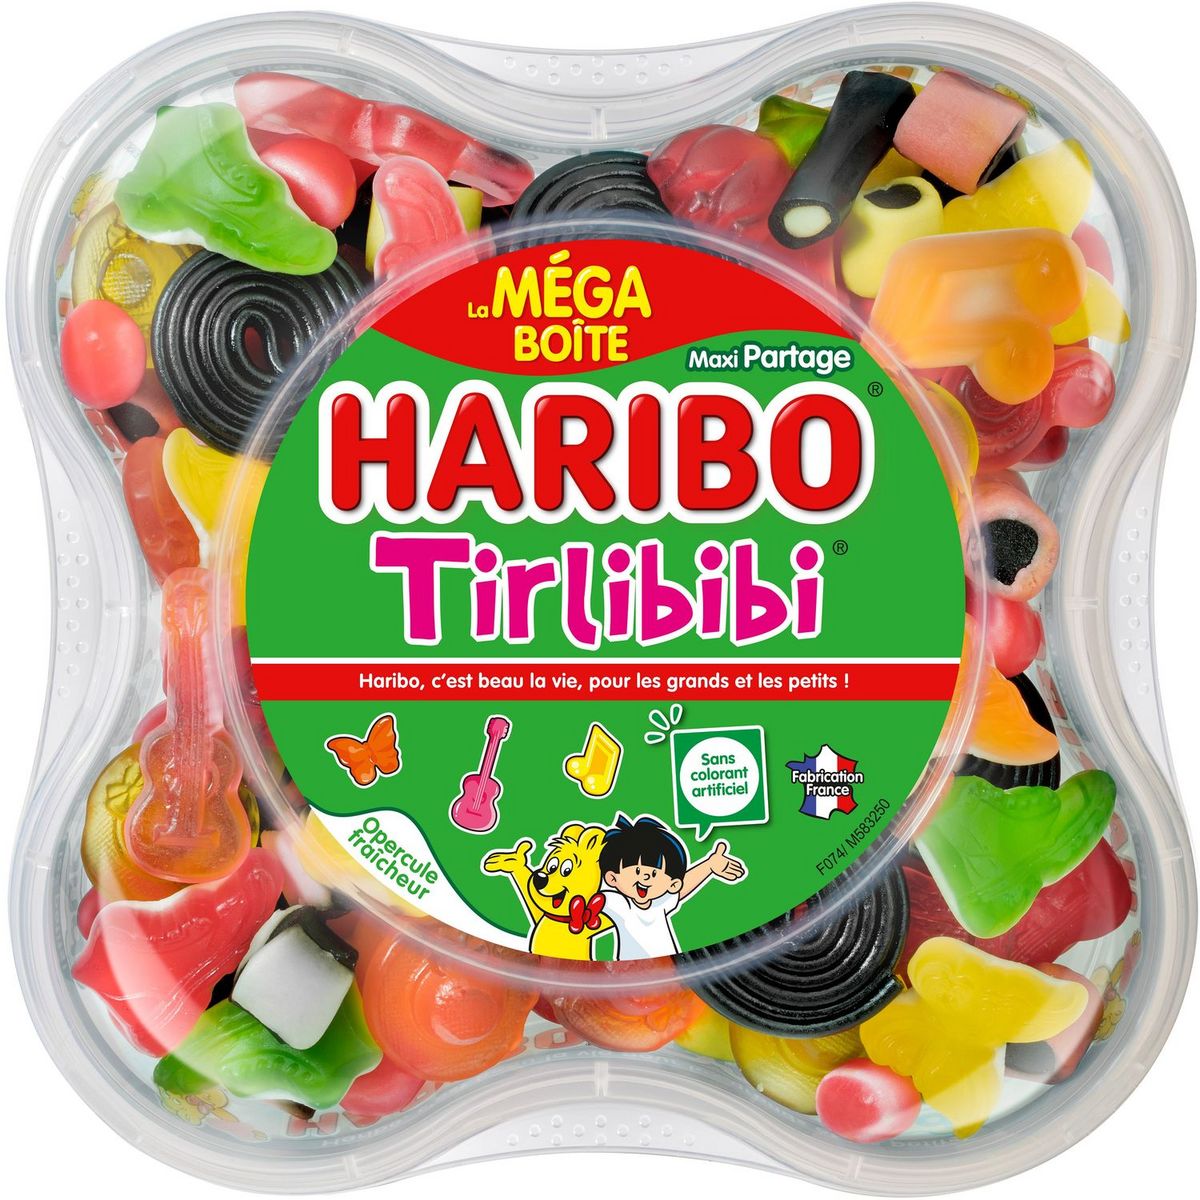 Haribo Tirlibibi Family Size Gelled Candy Assortment 1kg